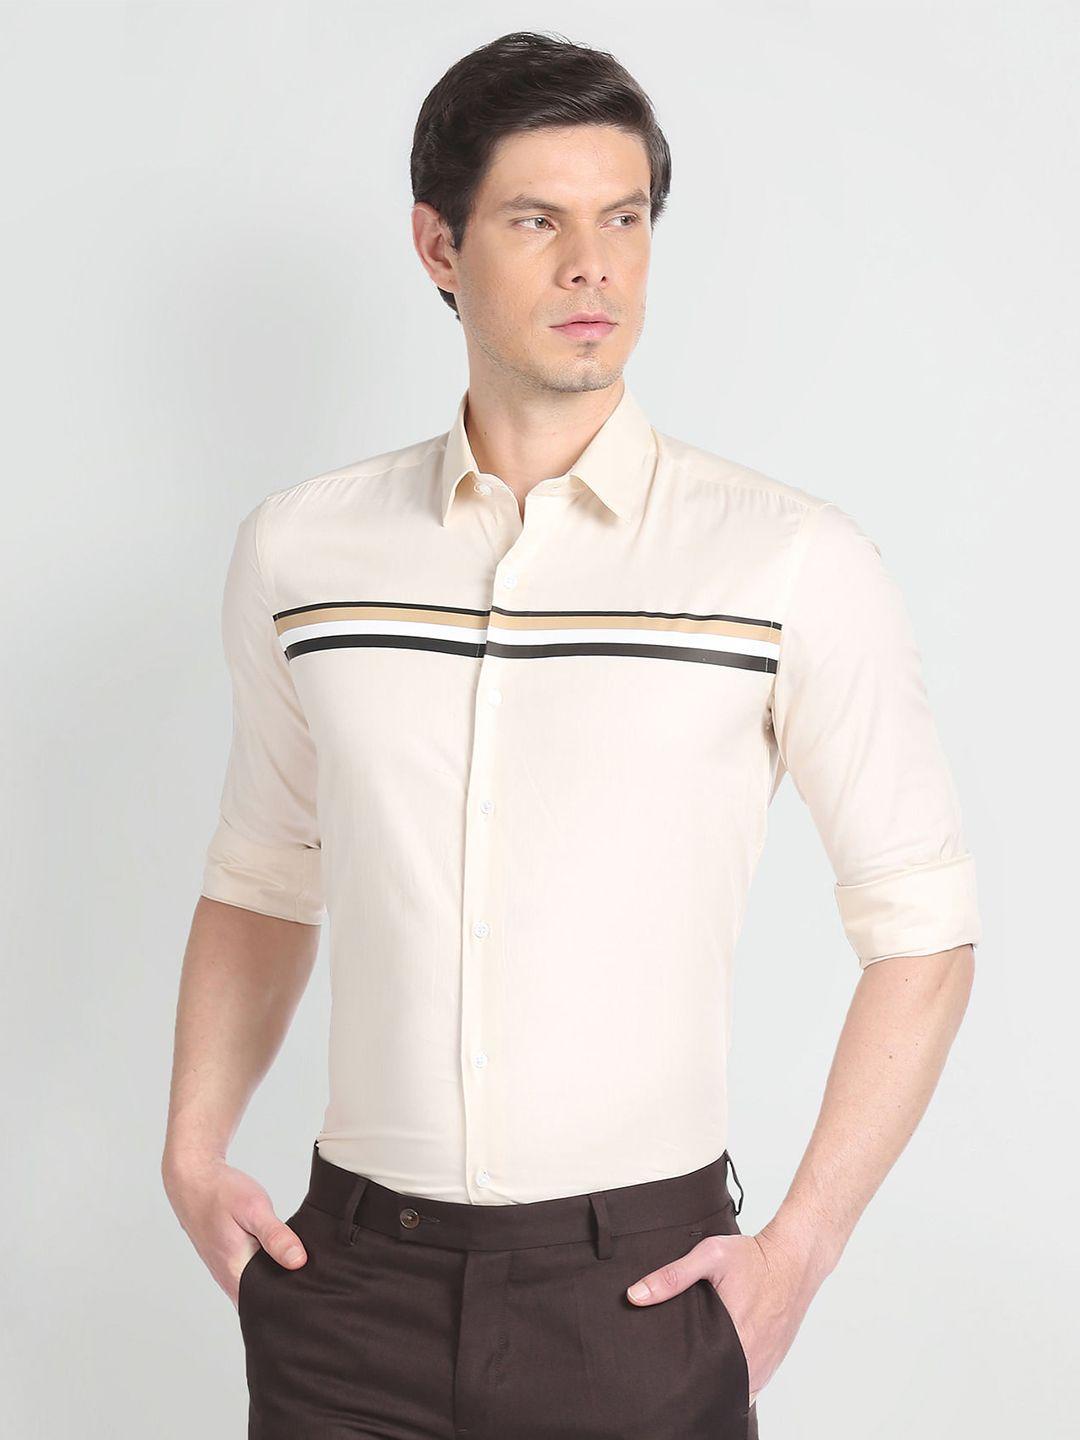 arrow new york slim fit horizontal striped twill formal pure cotton shirt